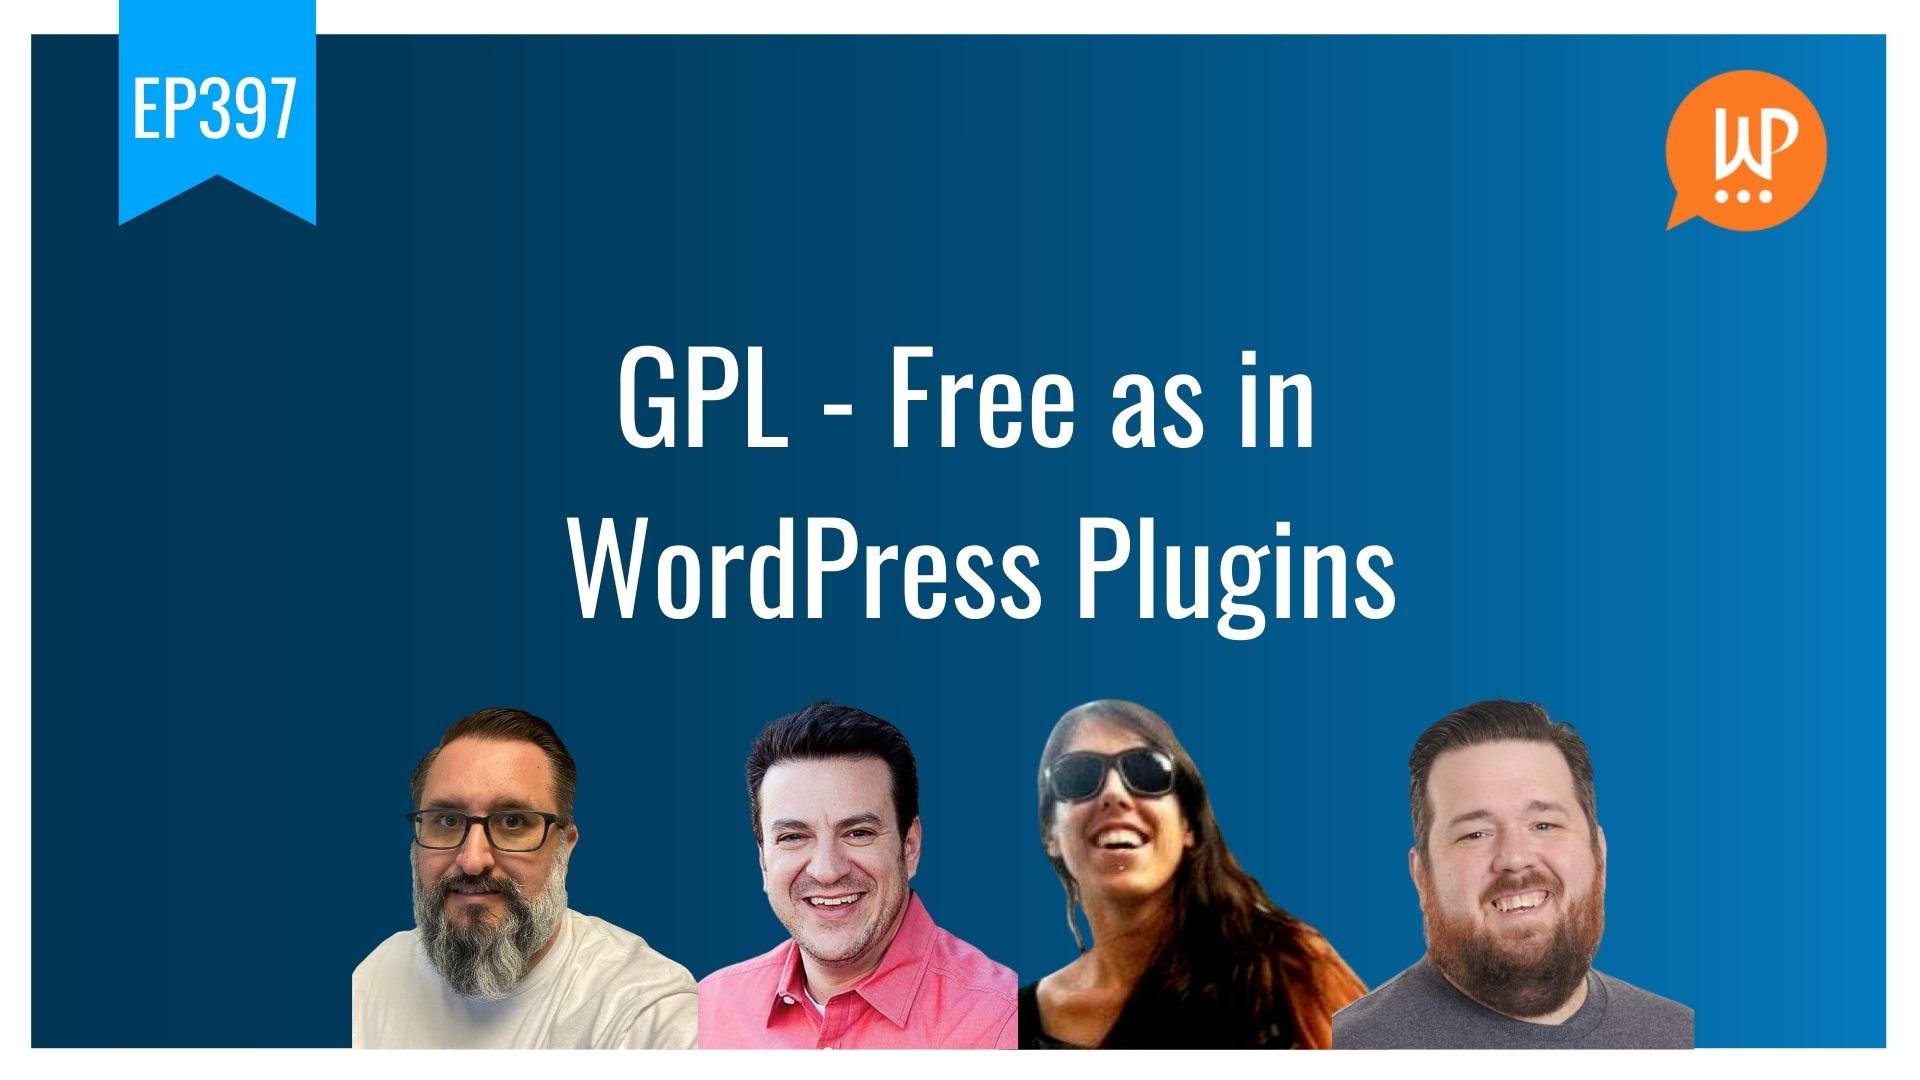 EP397 – GPL – Free as in WordPress Plugins